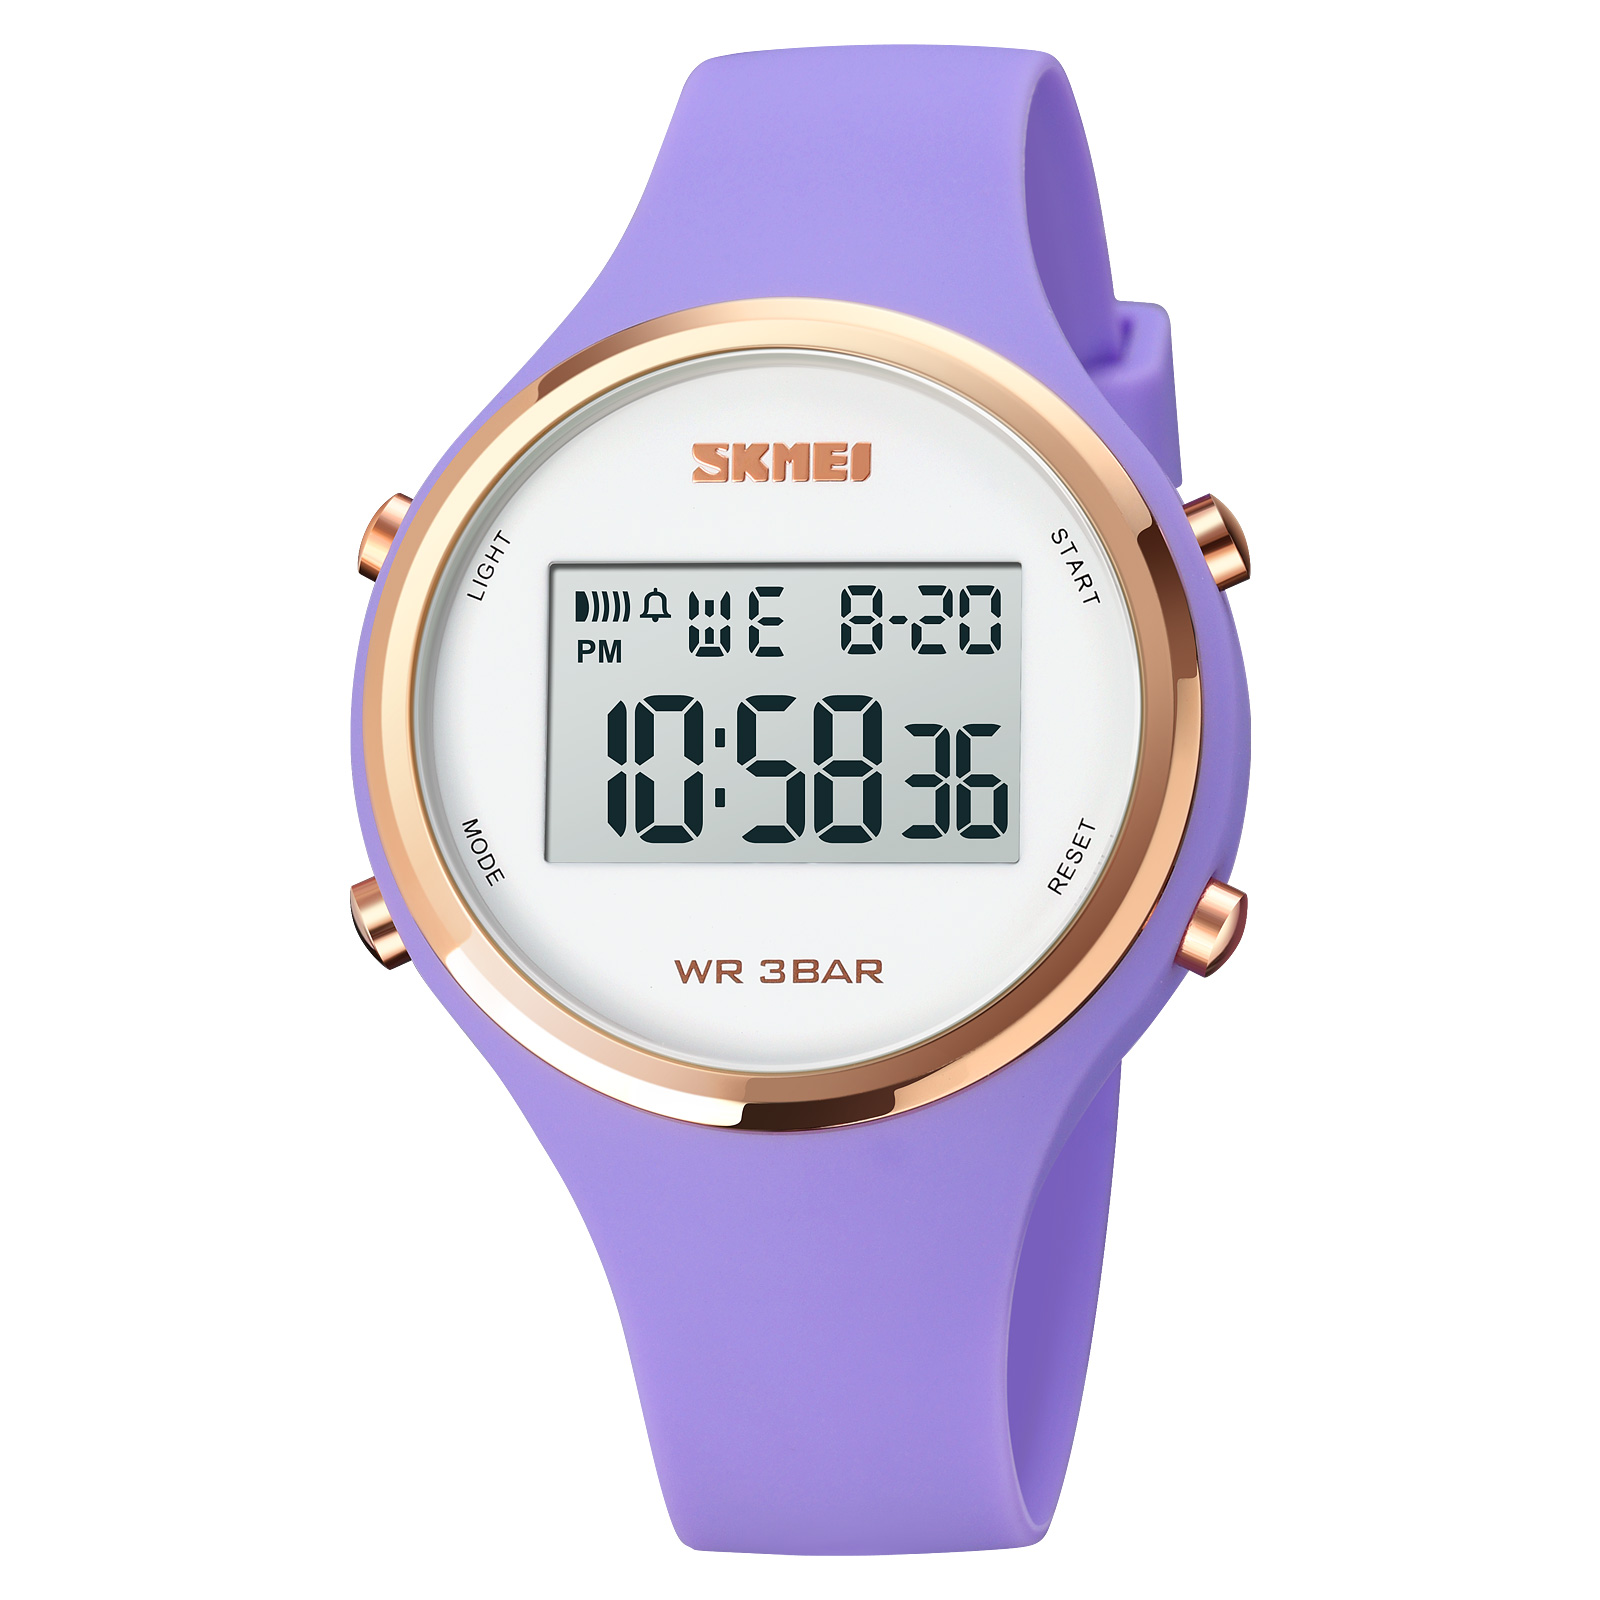 DIGITAL WATCH supplier-Skmei Watch Manufacture Co.,Ltd